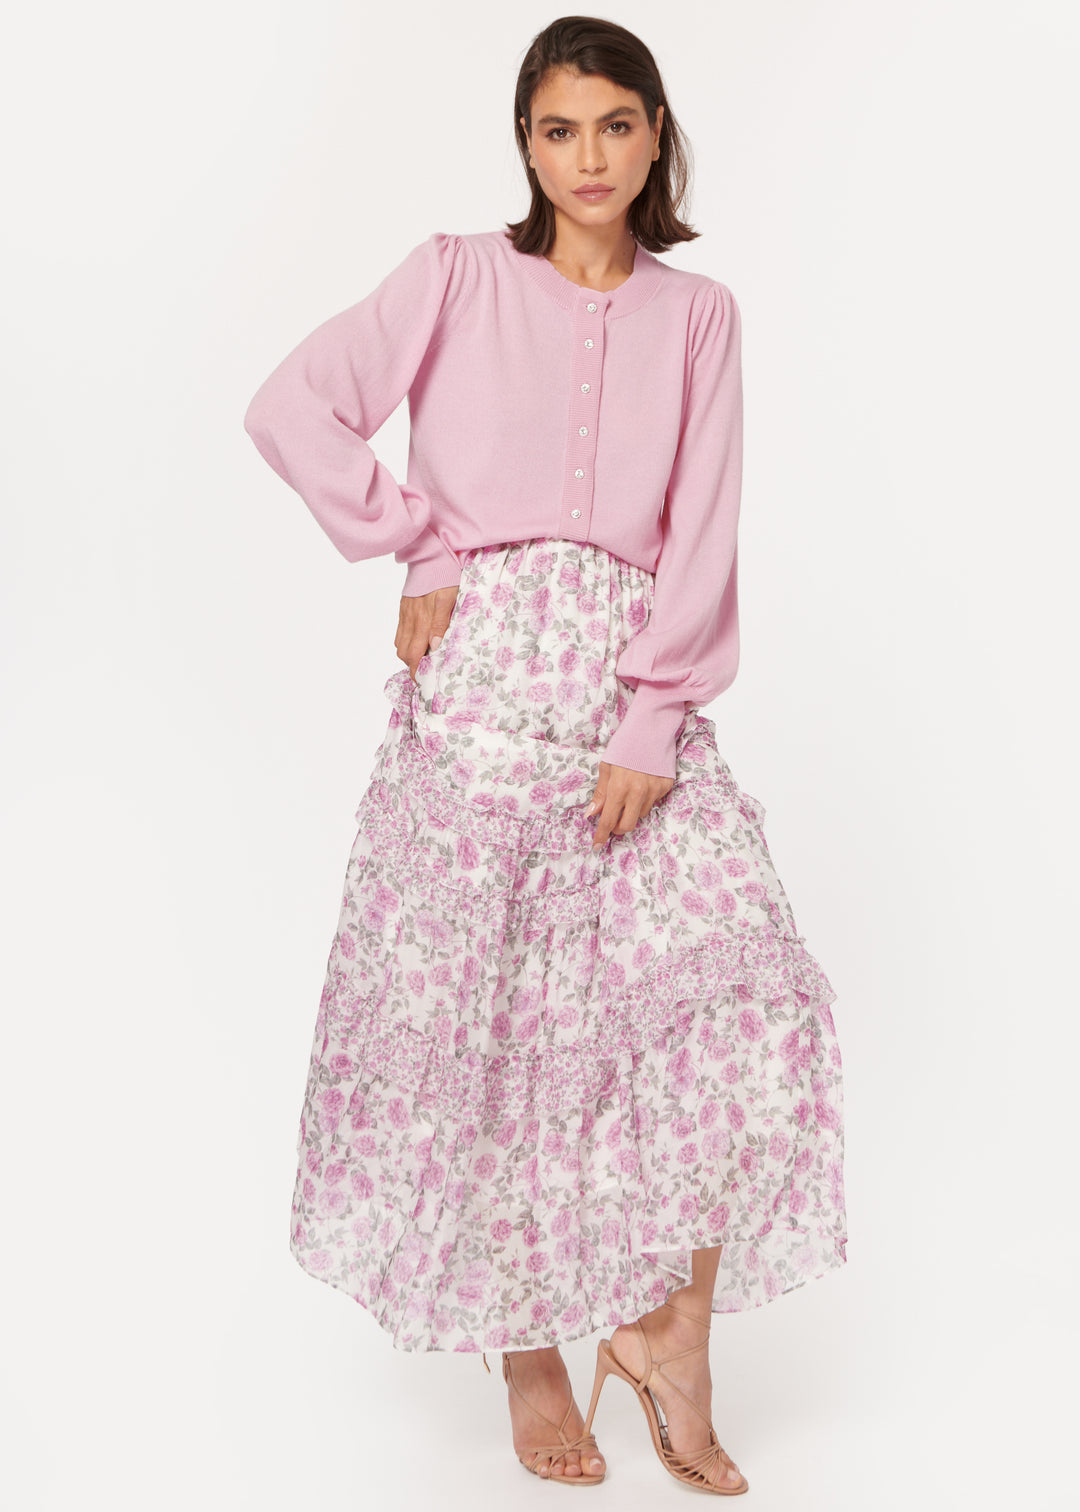 Cami NYC - Liu Skirt in Confetti Flora Combo